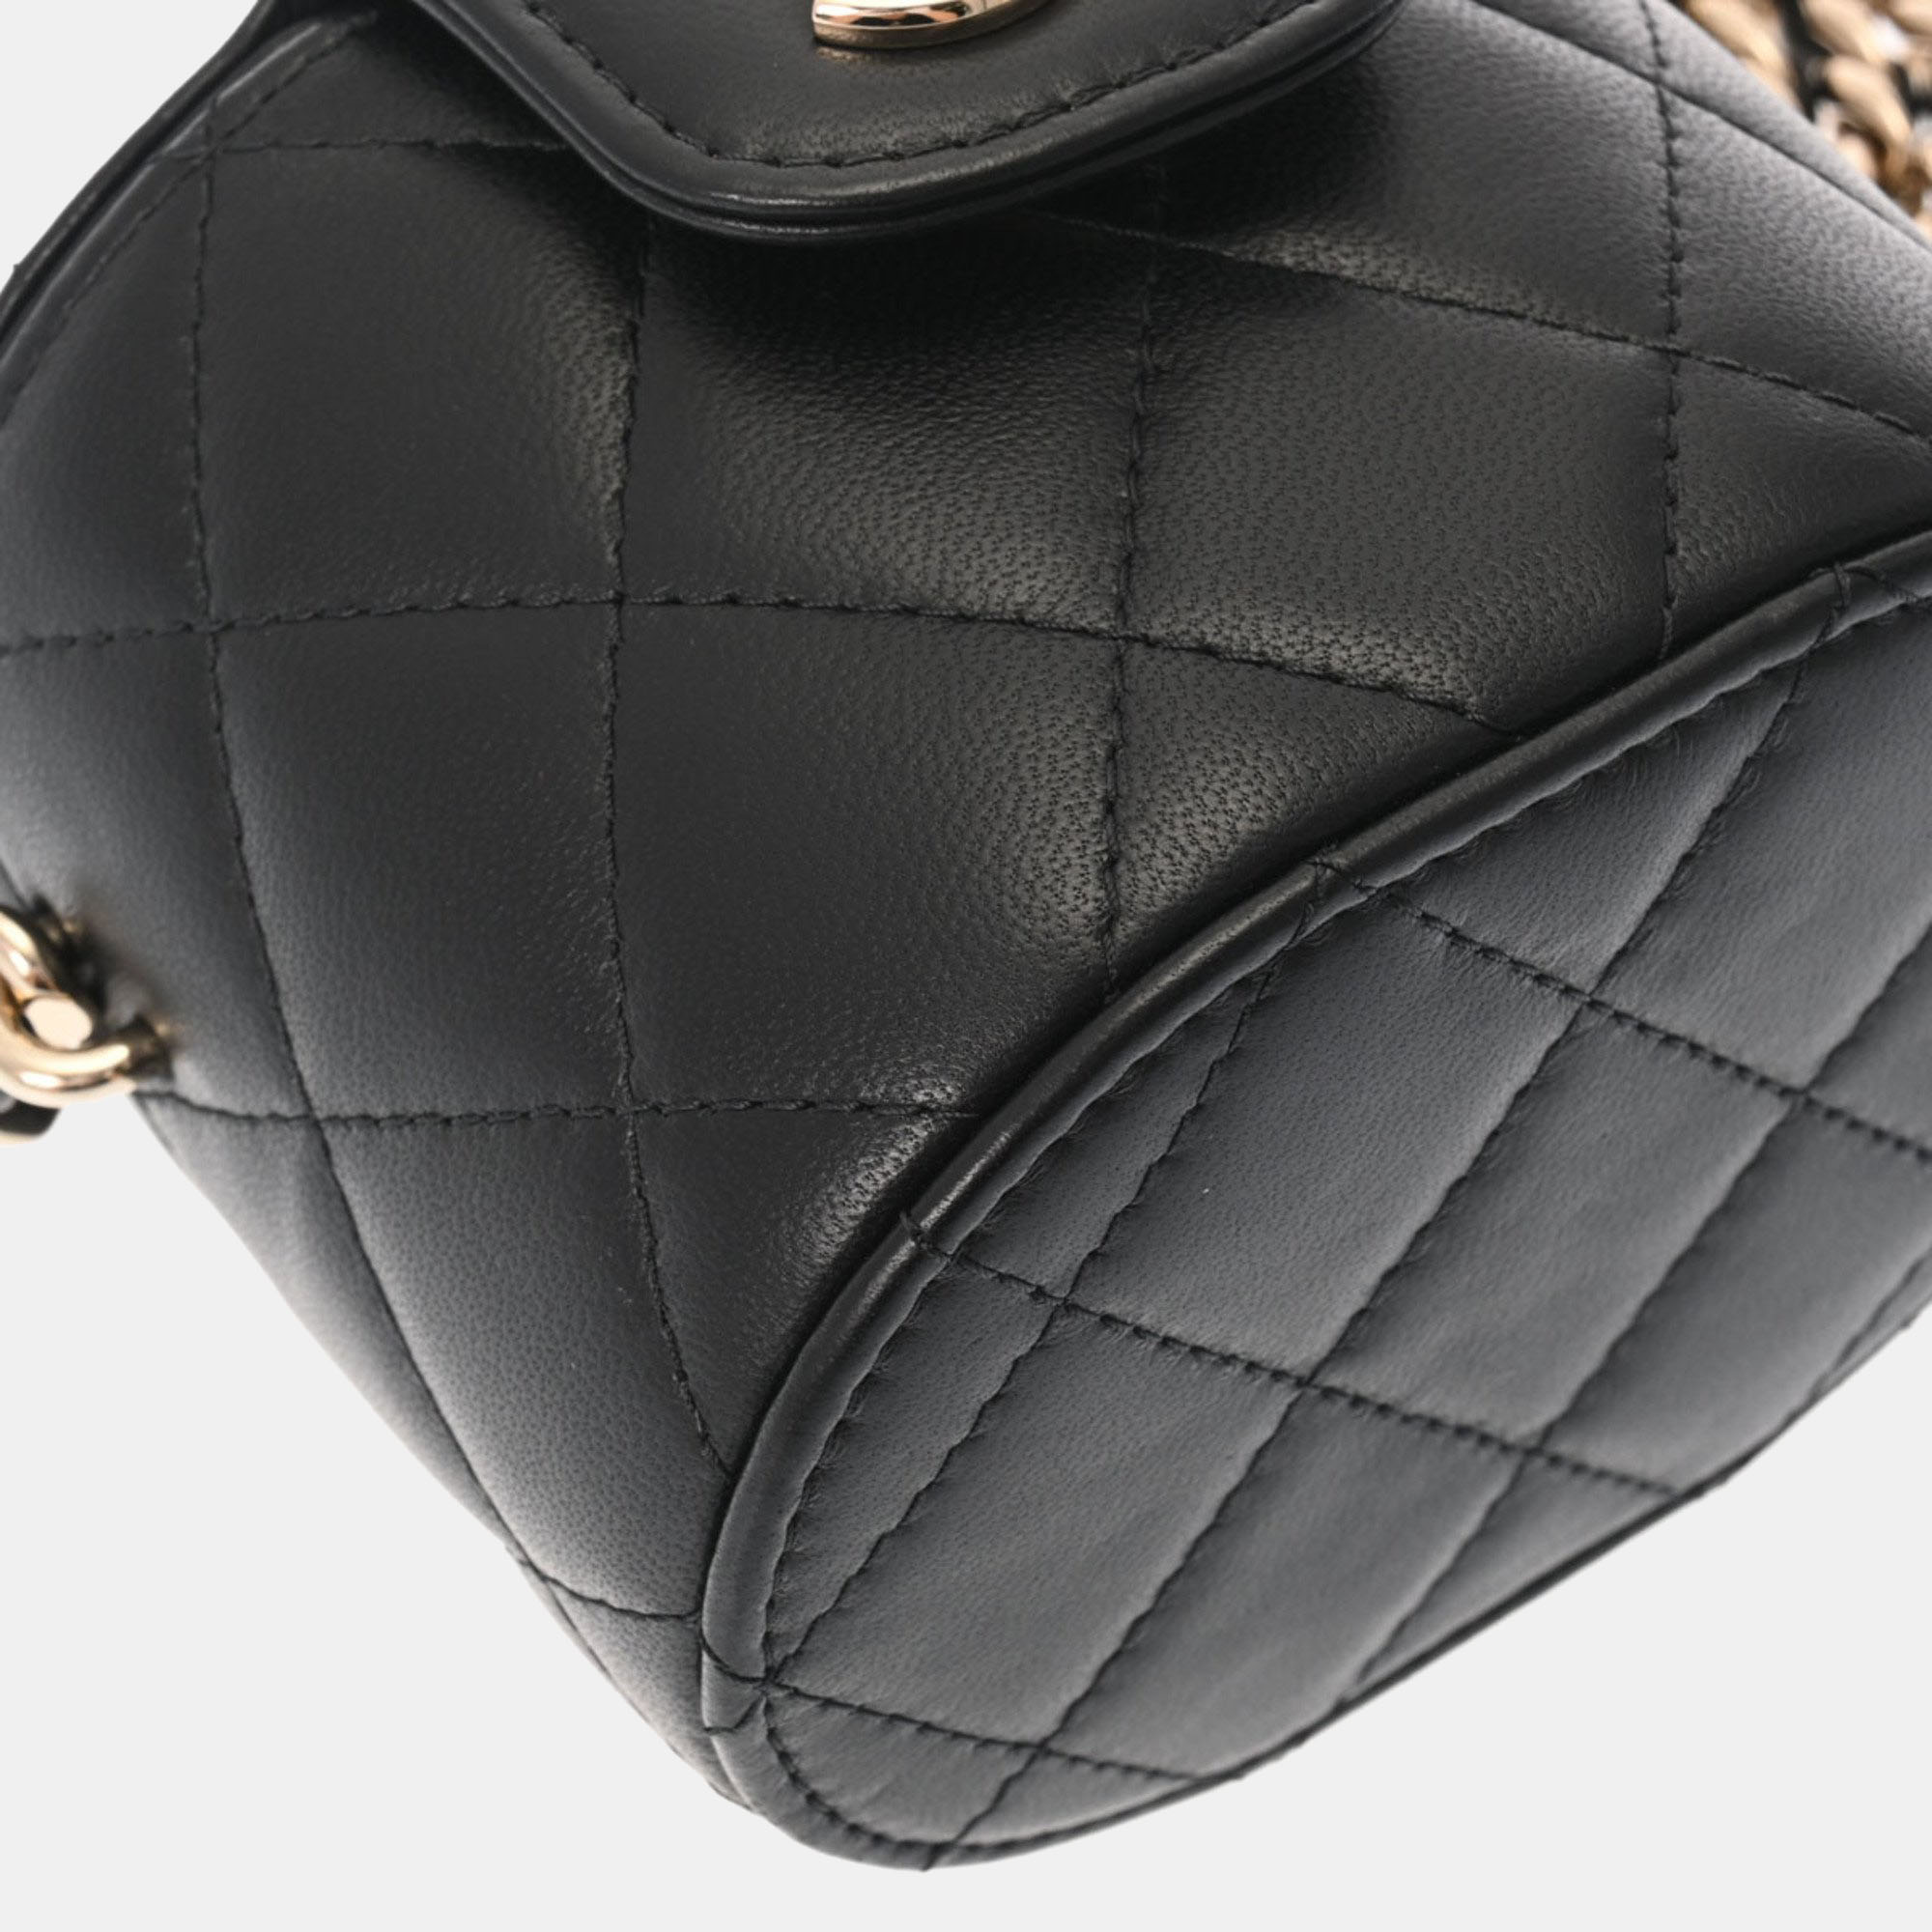 Chanel Black Leather Mini Vanity Case Clutch Bag